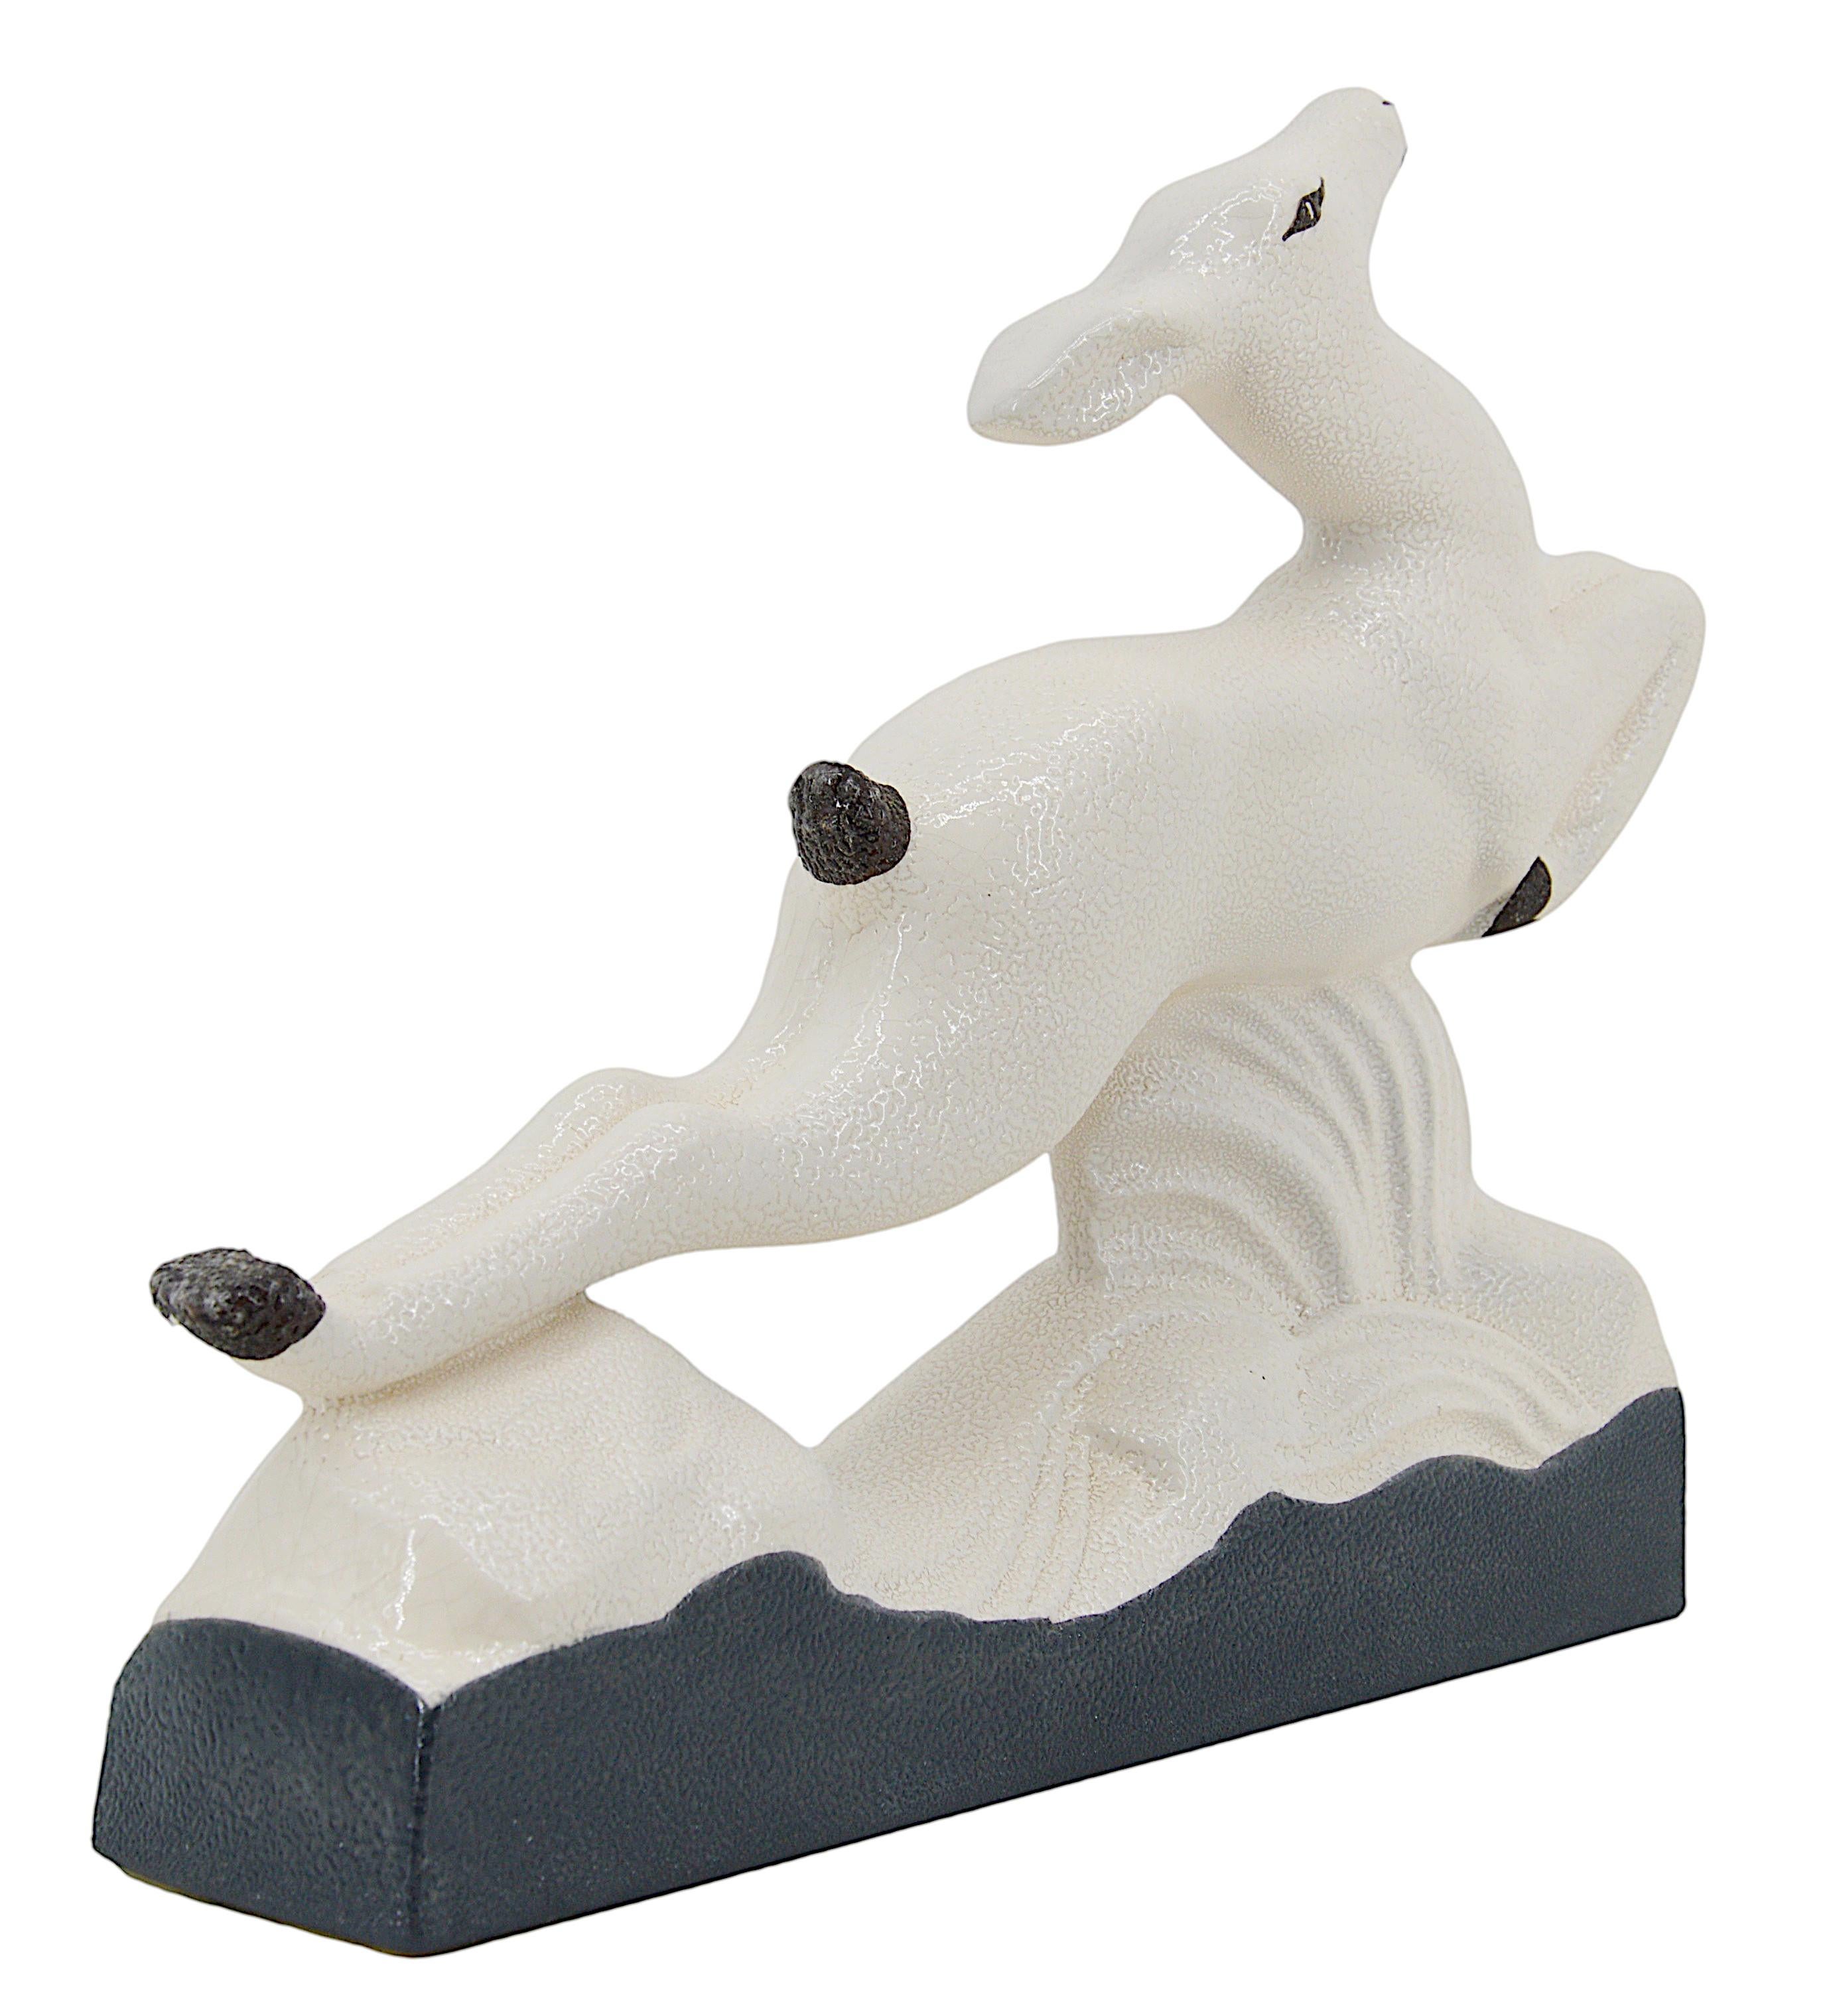 French Art Deco antelope ceramic sculpture by Charles LEMANCEAU at Sainte-Radegonde, France, 1930. Width: 13.4